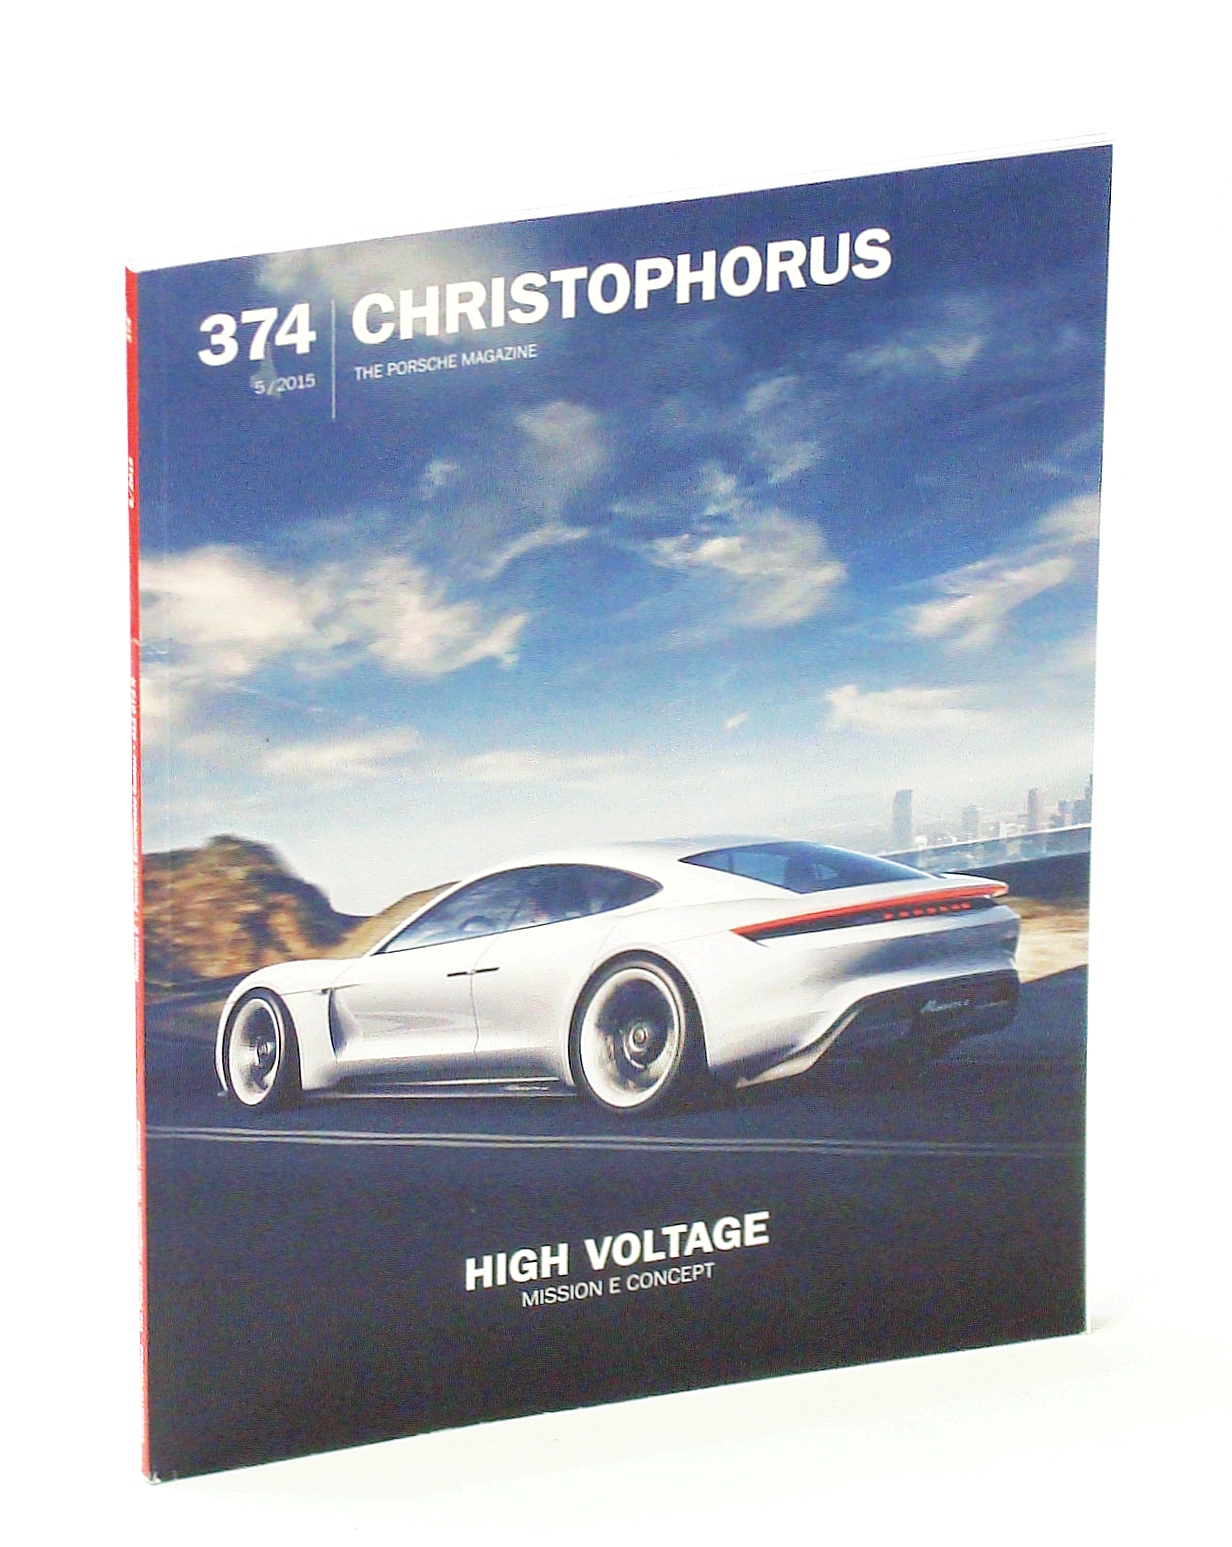 Christophorus - The Porsche Magazine, North America #374, Issue 5 / 2015:  High Voltage - Mission E Concept by Weidenhammer, Peter; et al: Fine  Paperback (2015) First Edition.